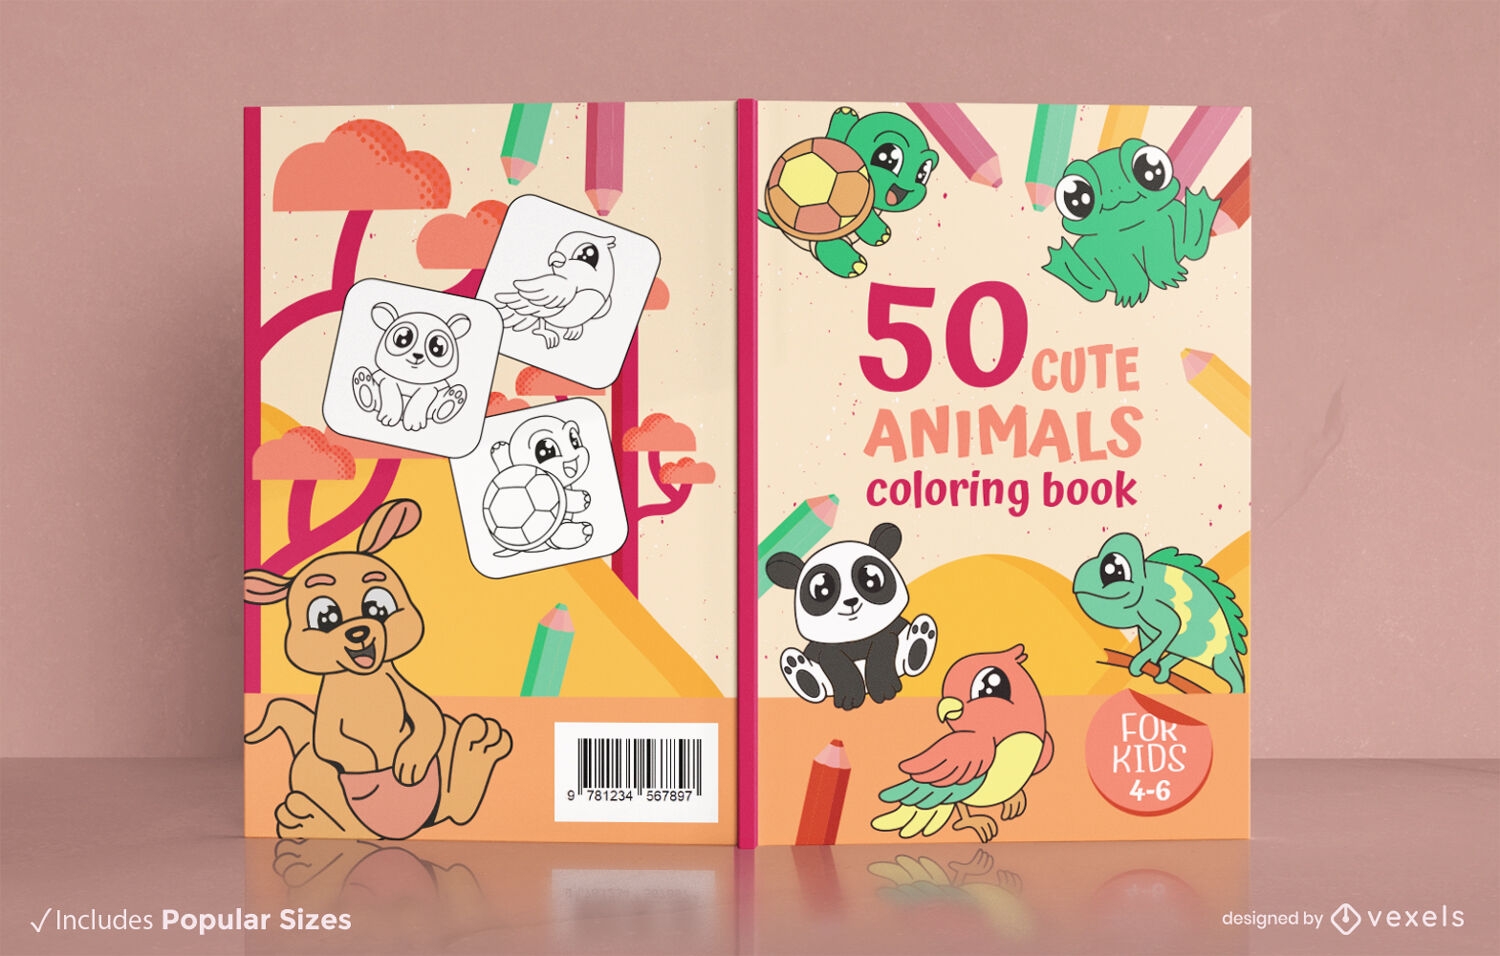 50 animals coloring book cover design KDP